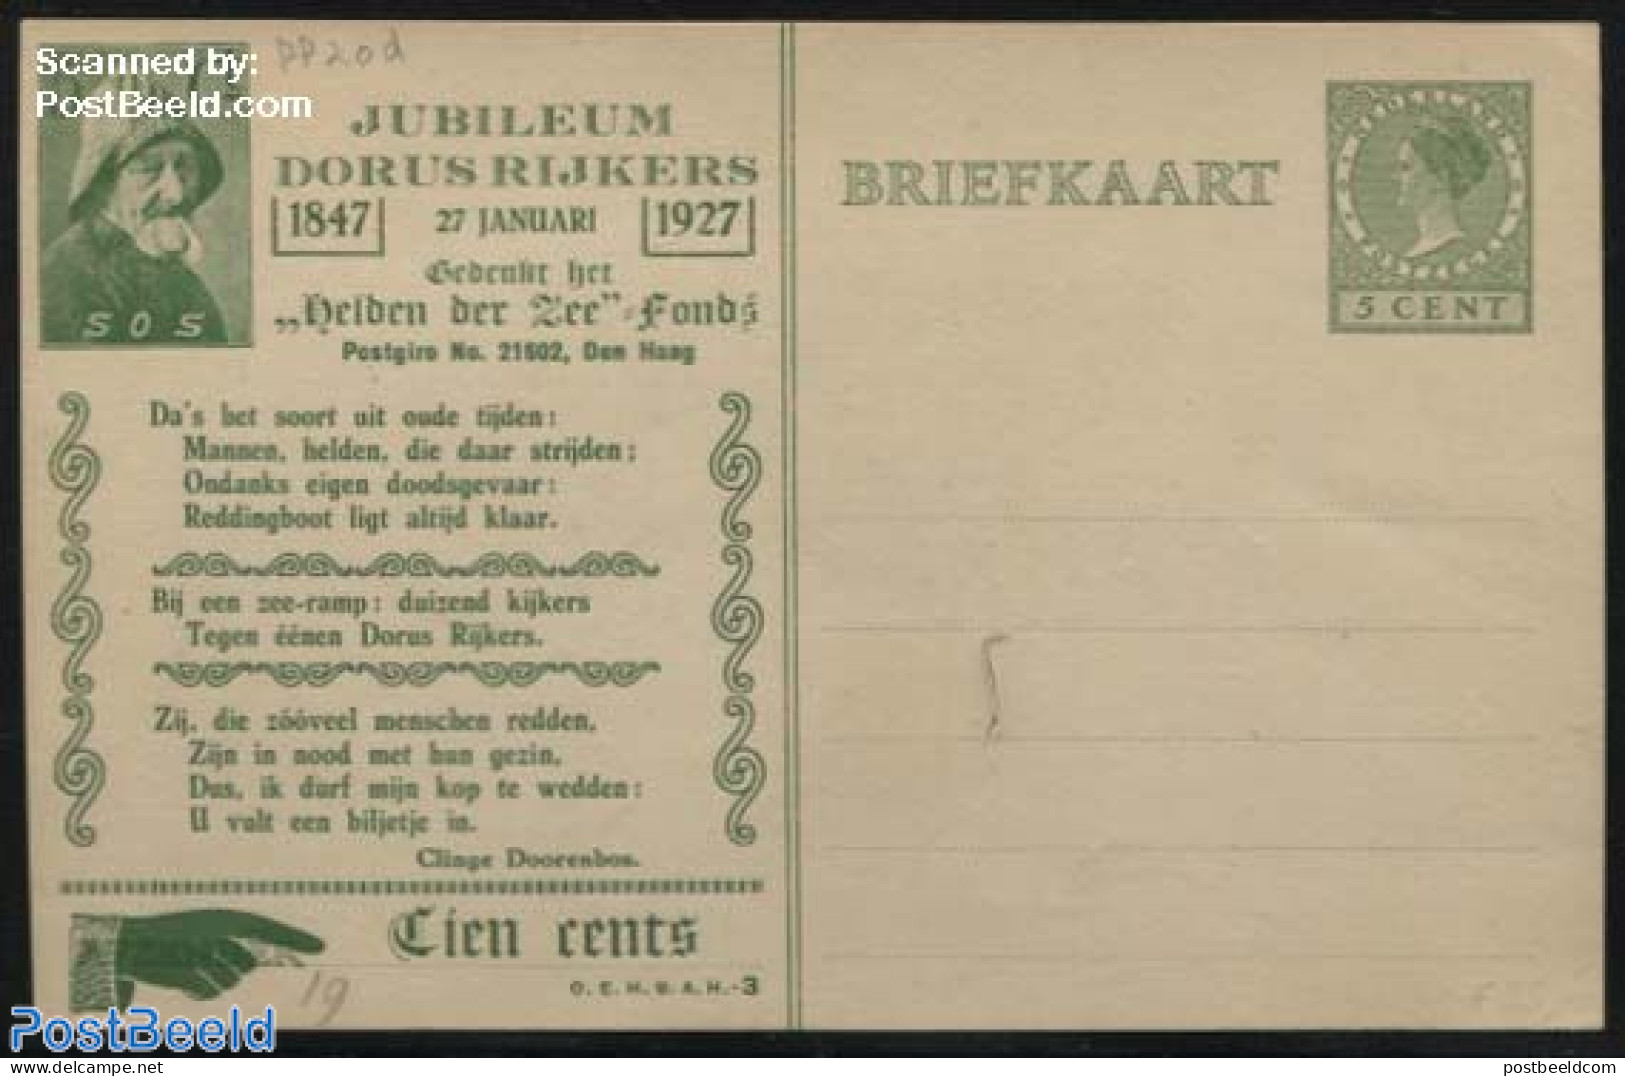 Netherlands 1927 Postcard With Private Printing, Dorus Rijkers 3, Das Het Soort..., Unused Postal Stationary - Covers & Documents